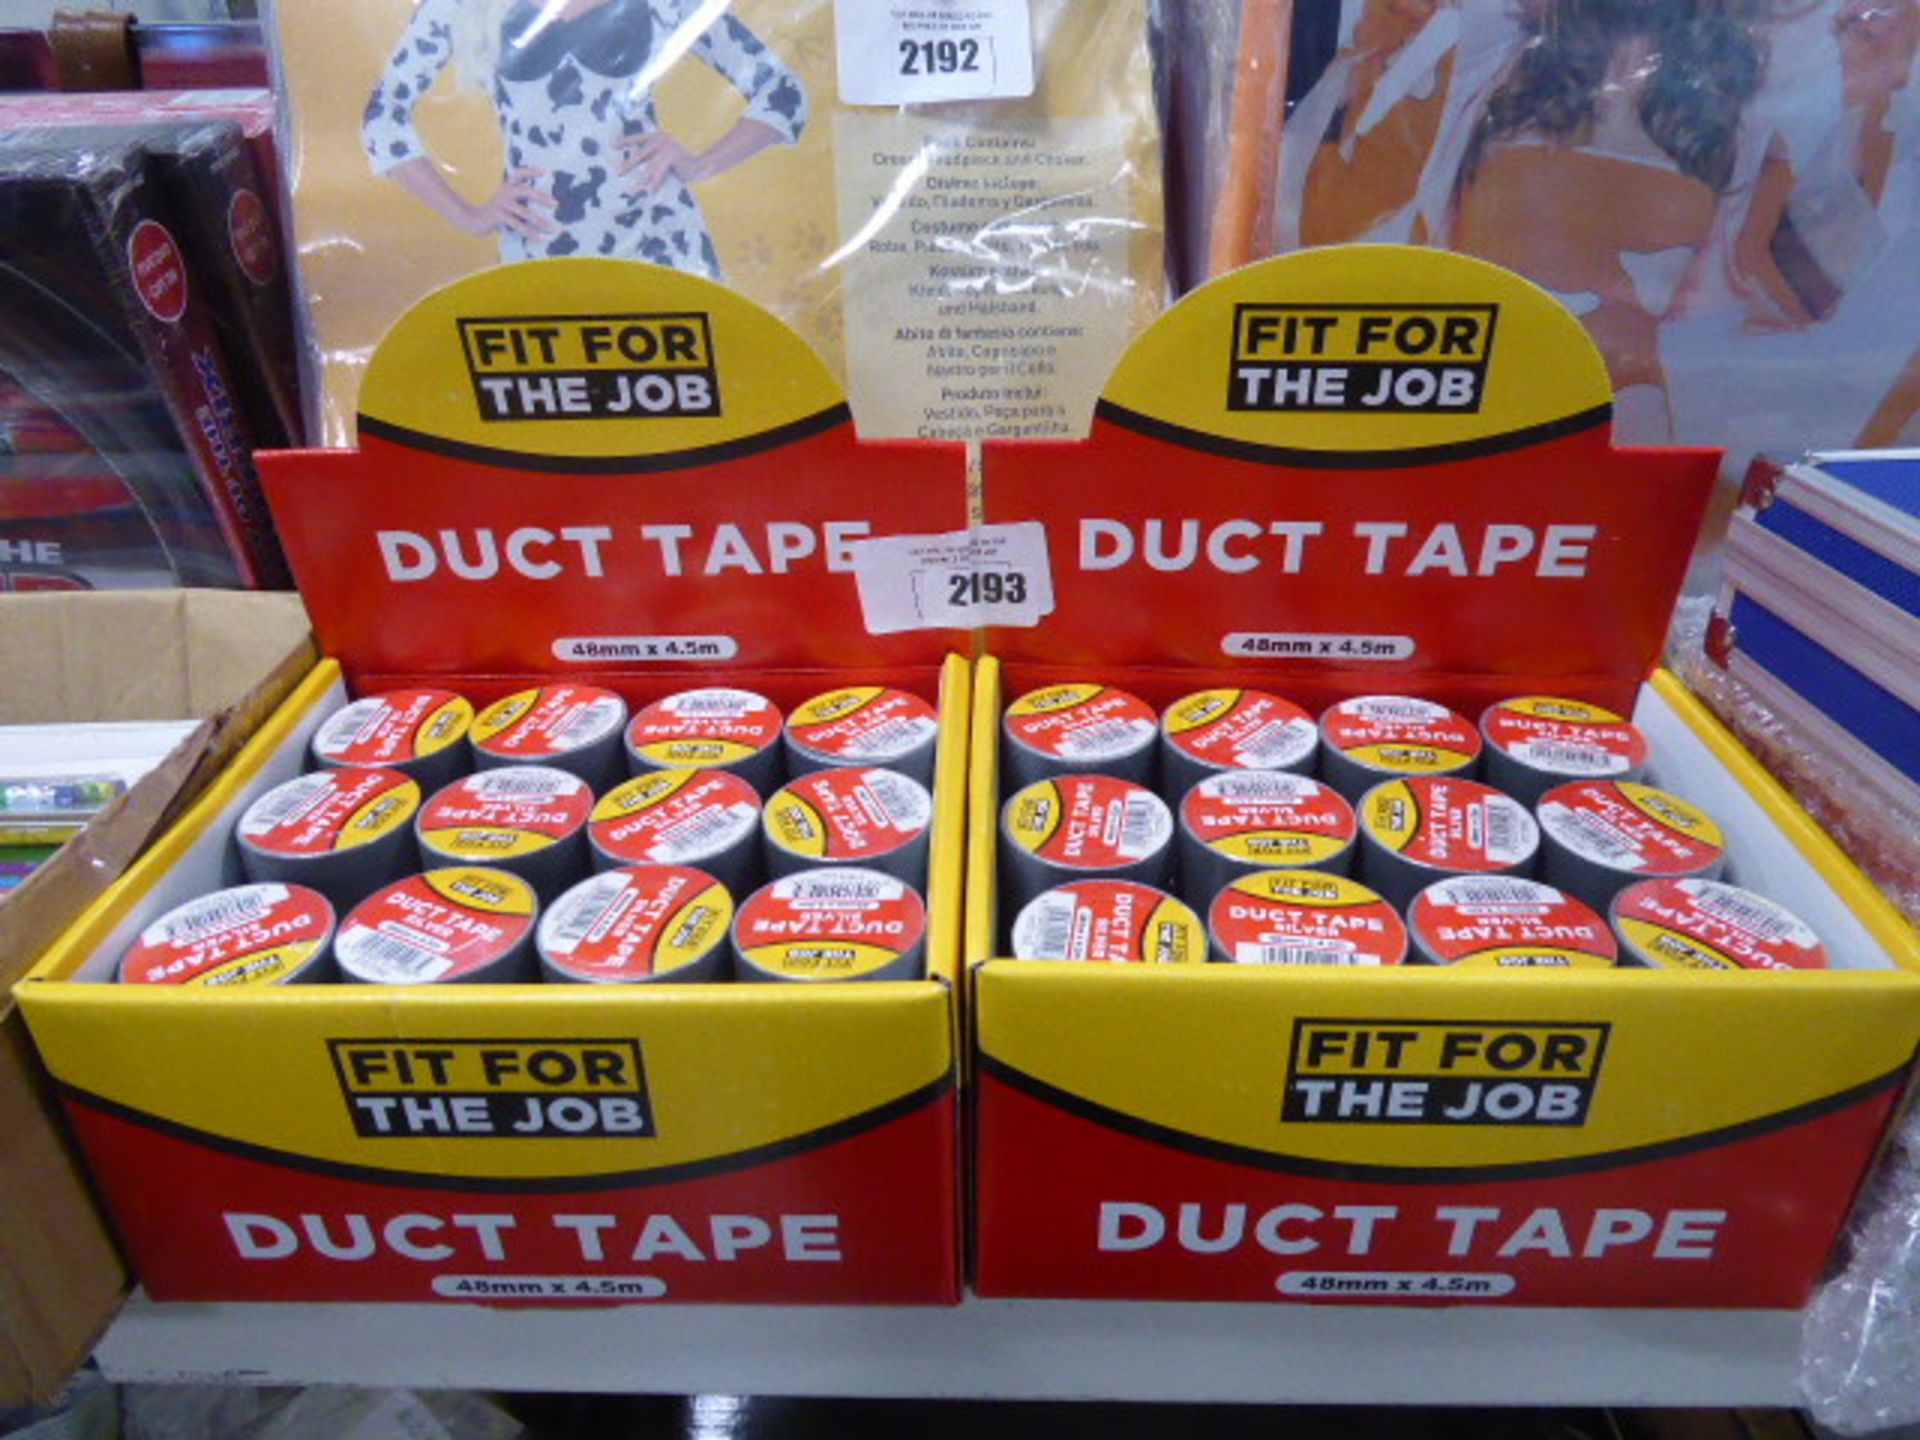 48mm x 4.5m duck tape rolls